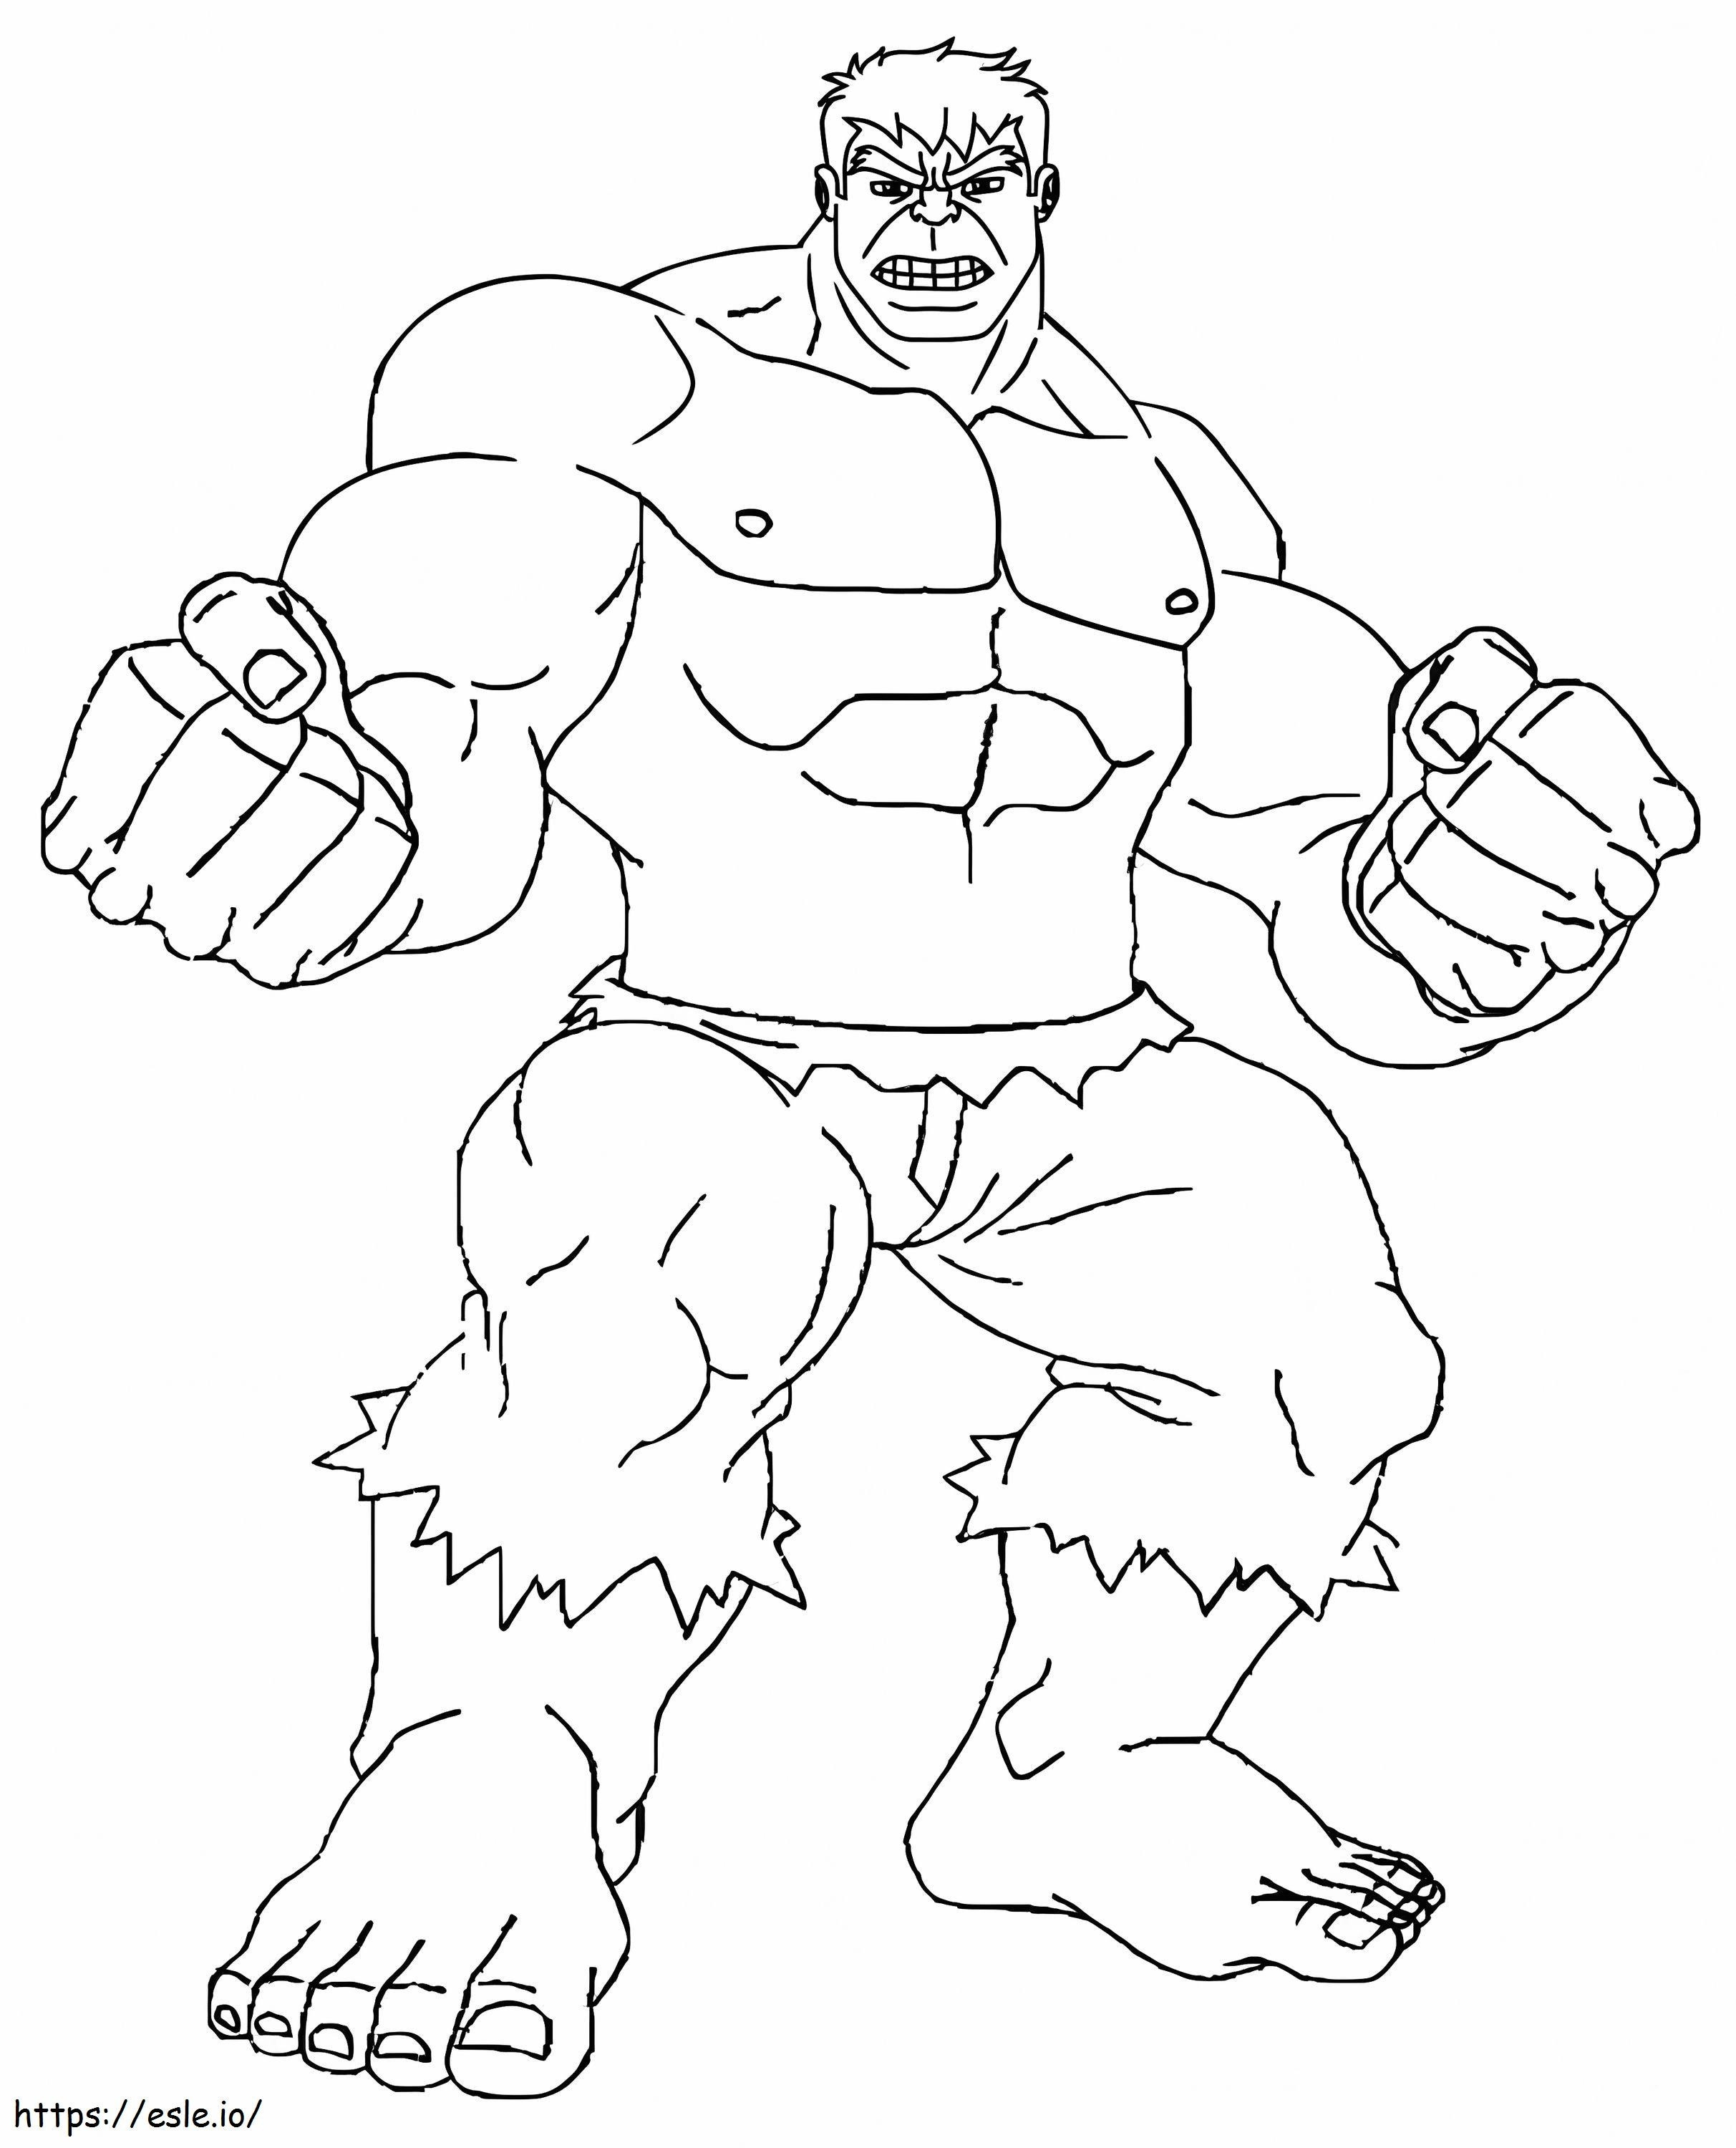 Gran Hulk coloring page